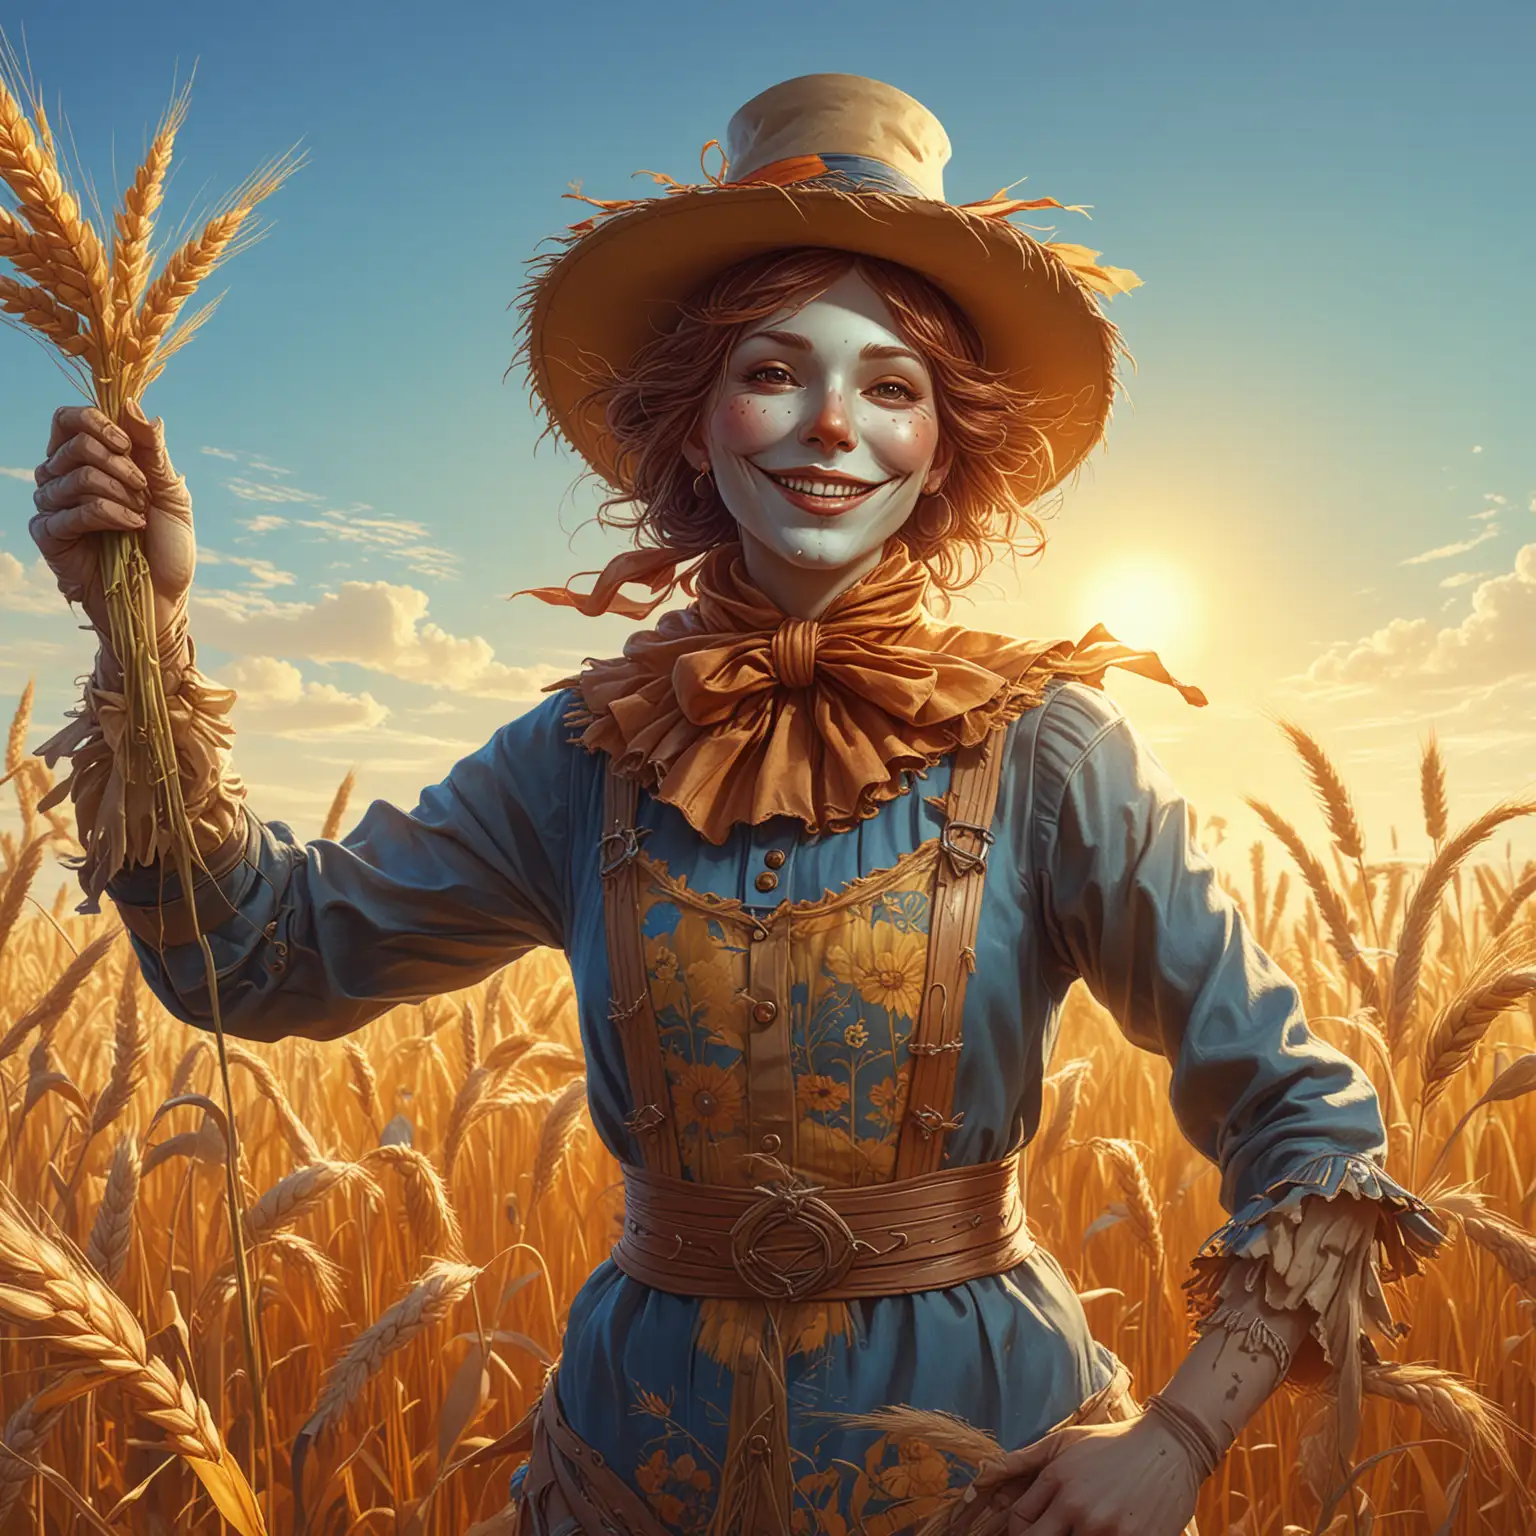 AwardWinning Cheerful Scarecrow Amidst Wheat Field under Sunny Sky